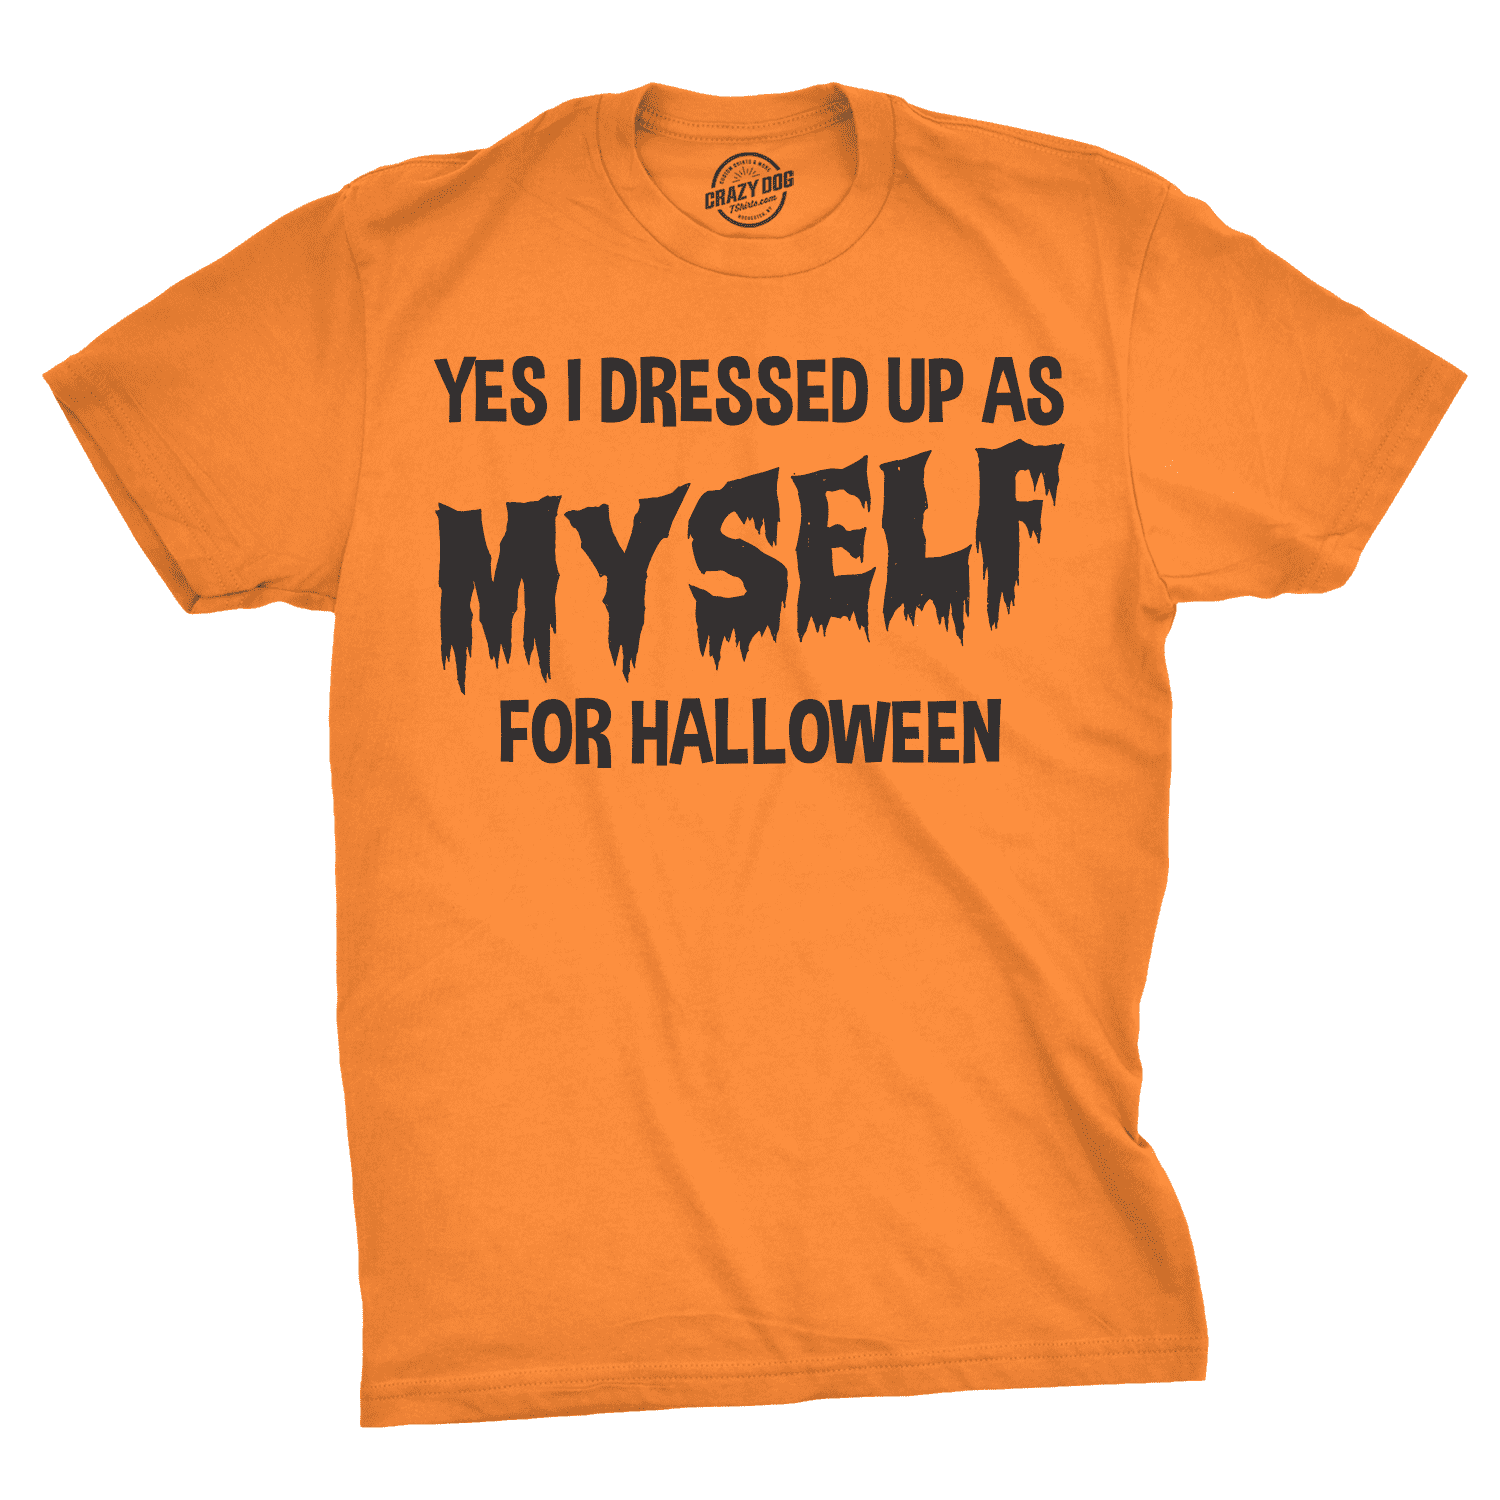 XXXL Halloween T-shirt parody Basic Witch shirt unisex party costume Tee SM